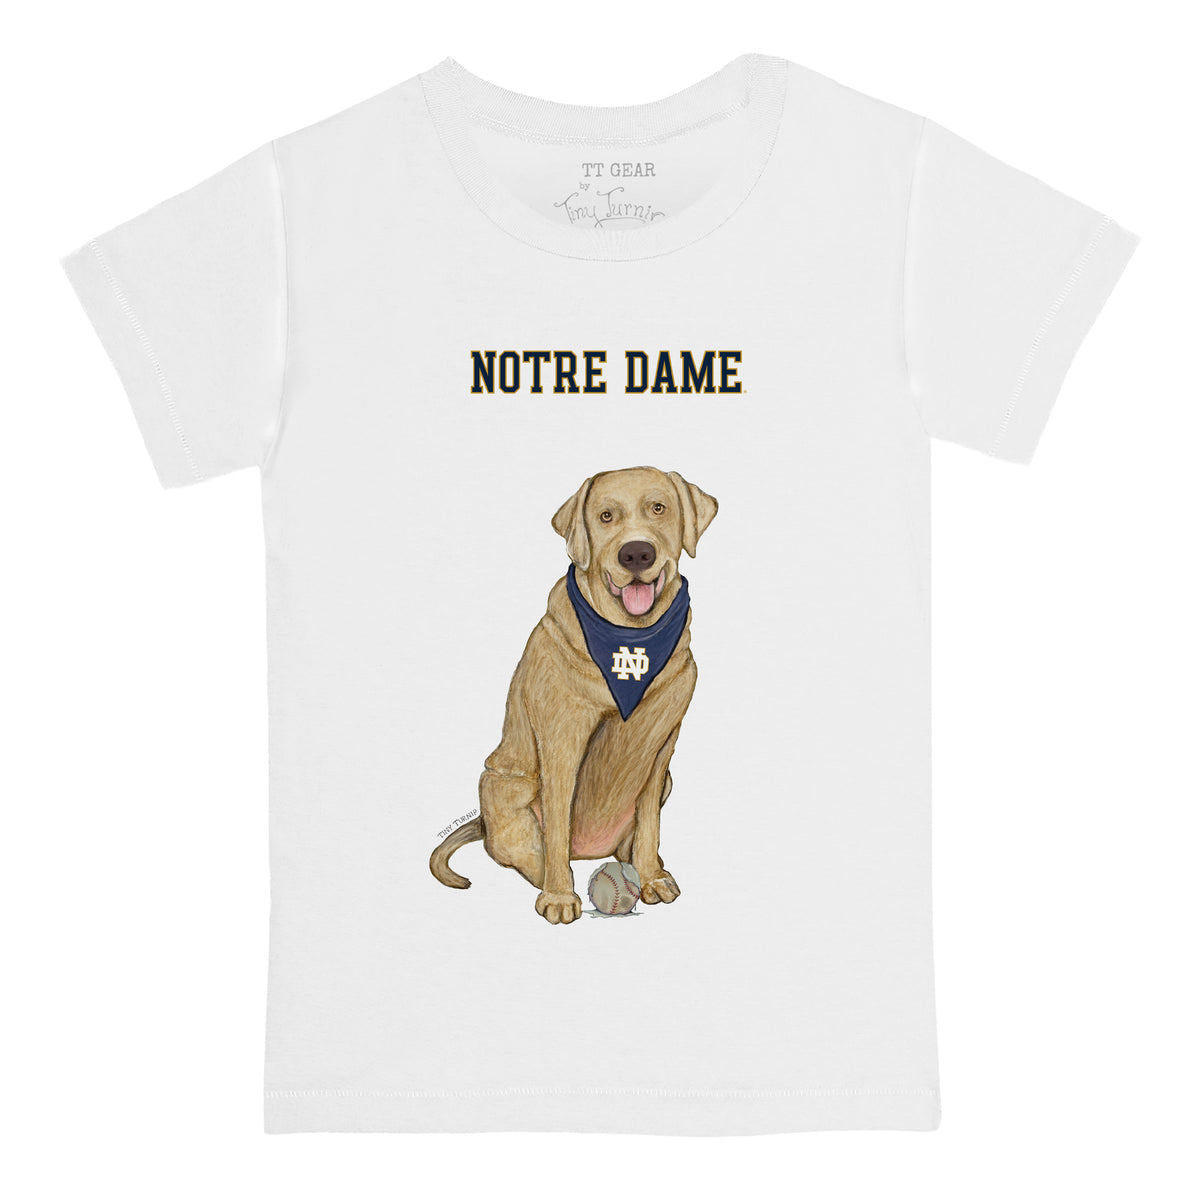 Notre Dame Fighting Irish Yellow Labrador Retriever Tee Shirt